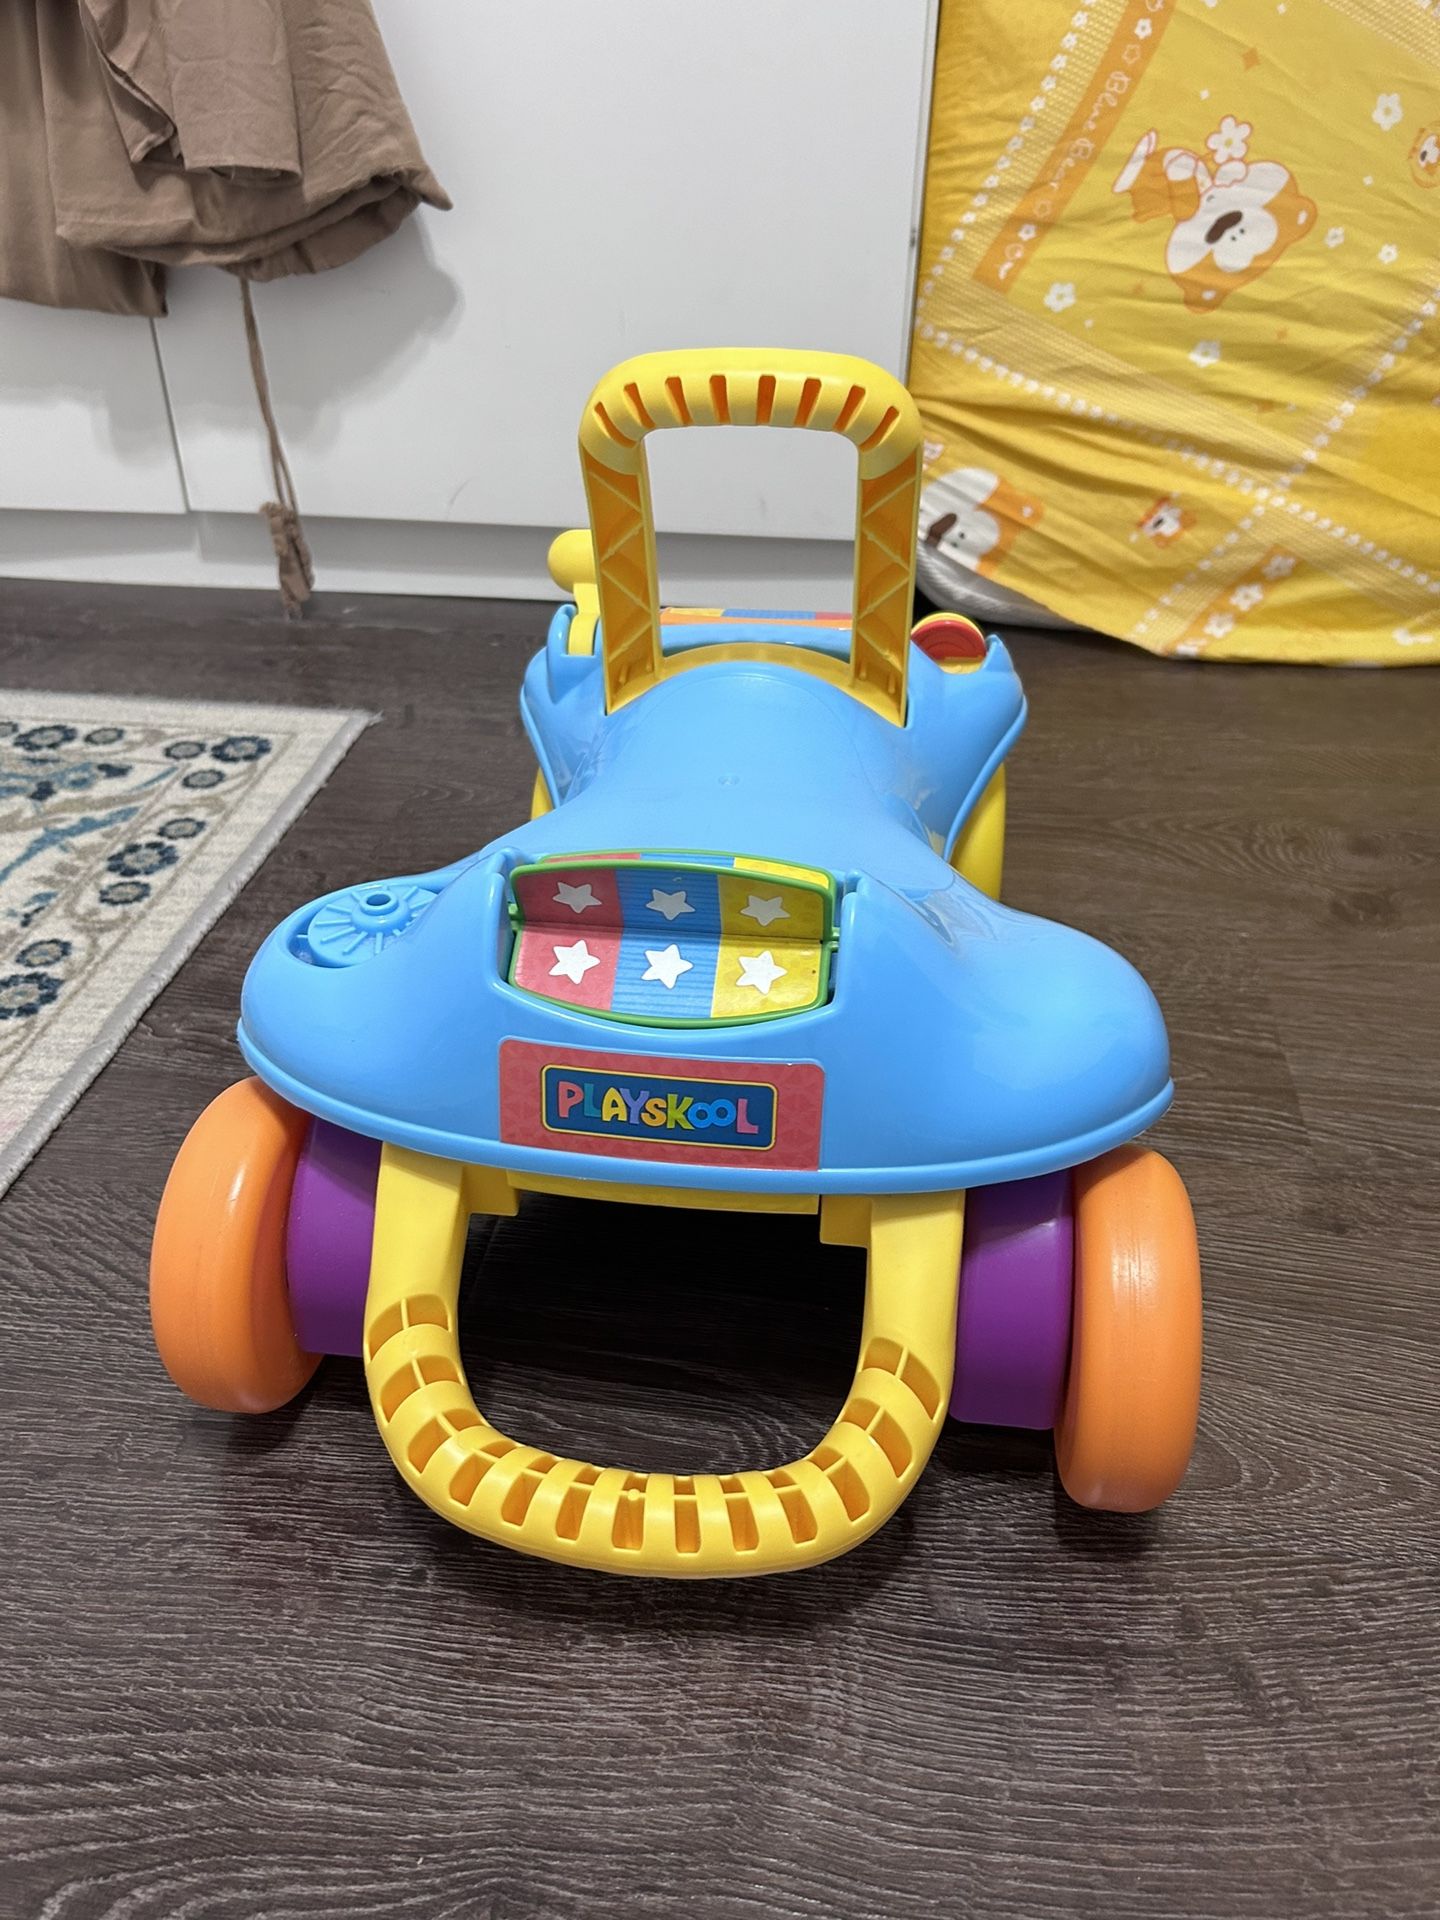 Playskool - Baby Walker And Car Toy